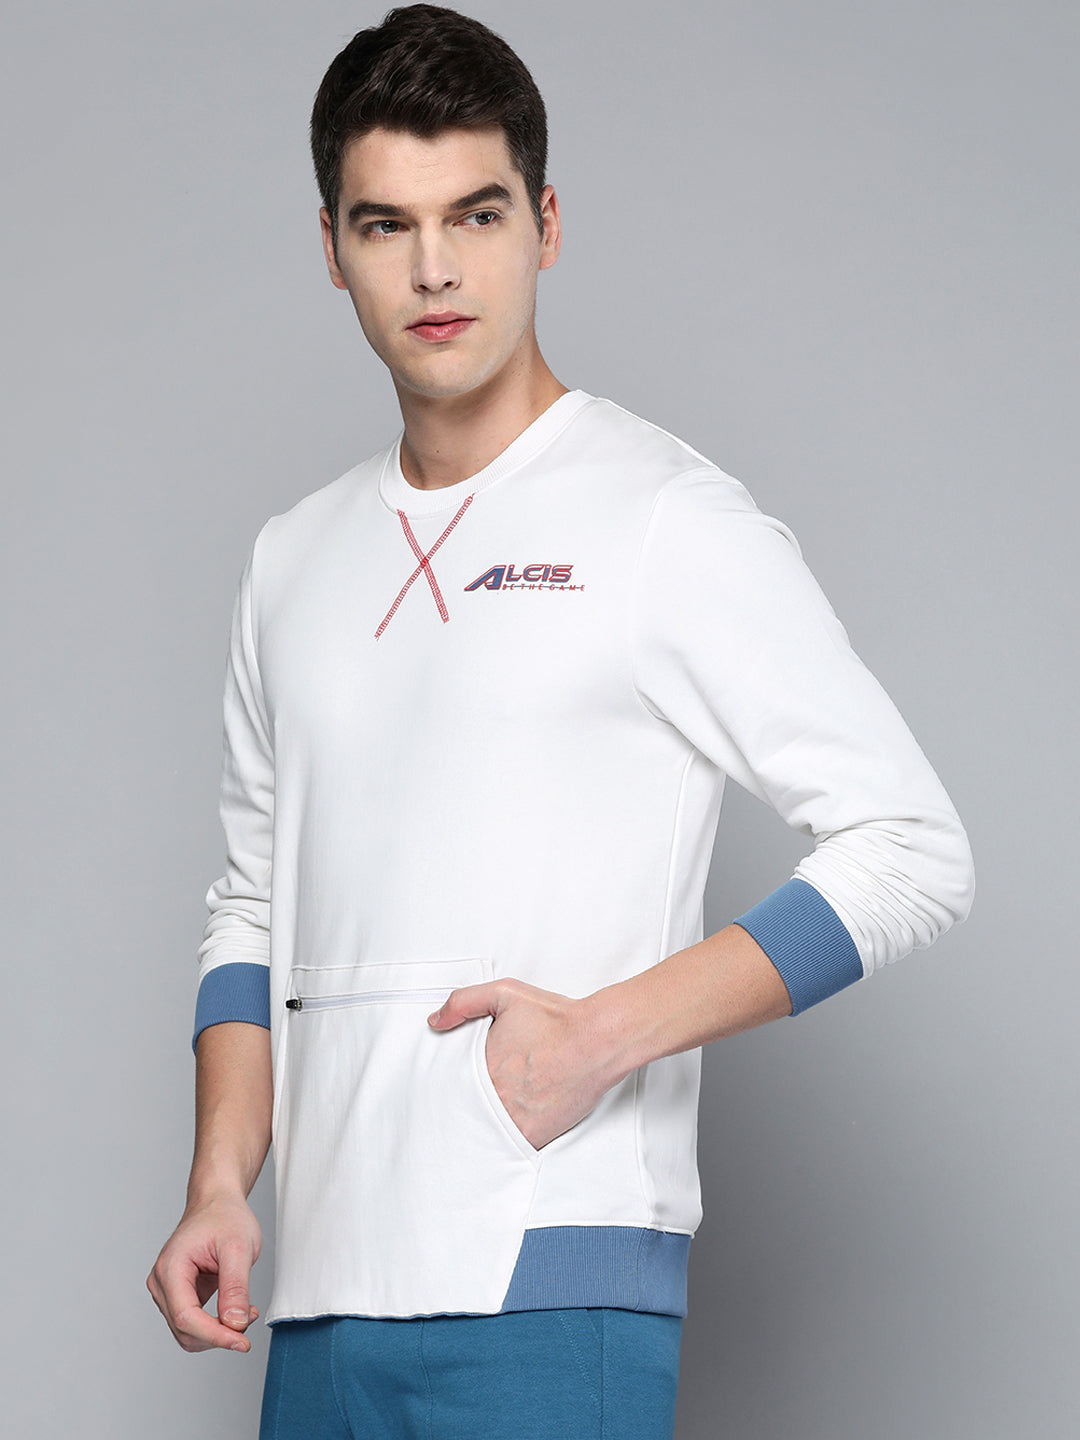 Alcis Men White Solid Sweatshirt